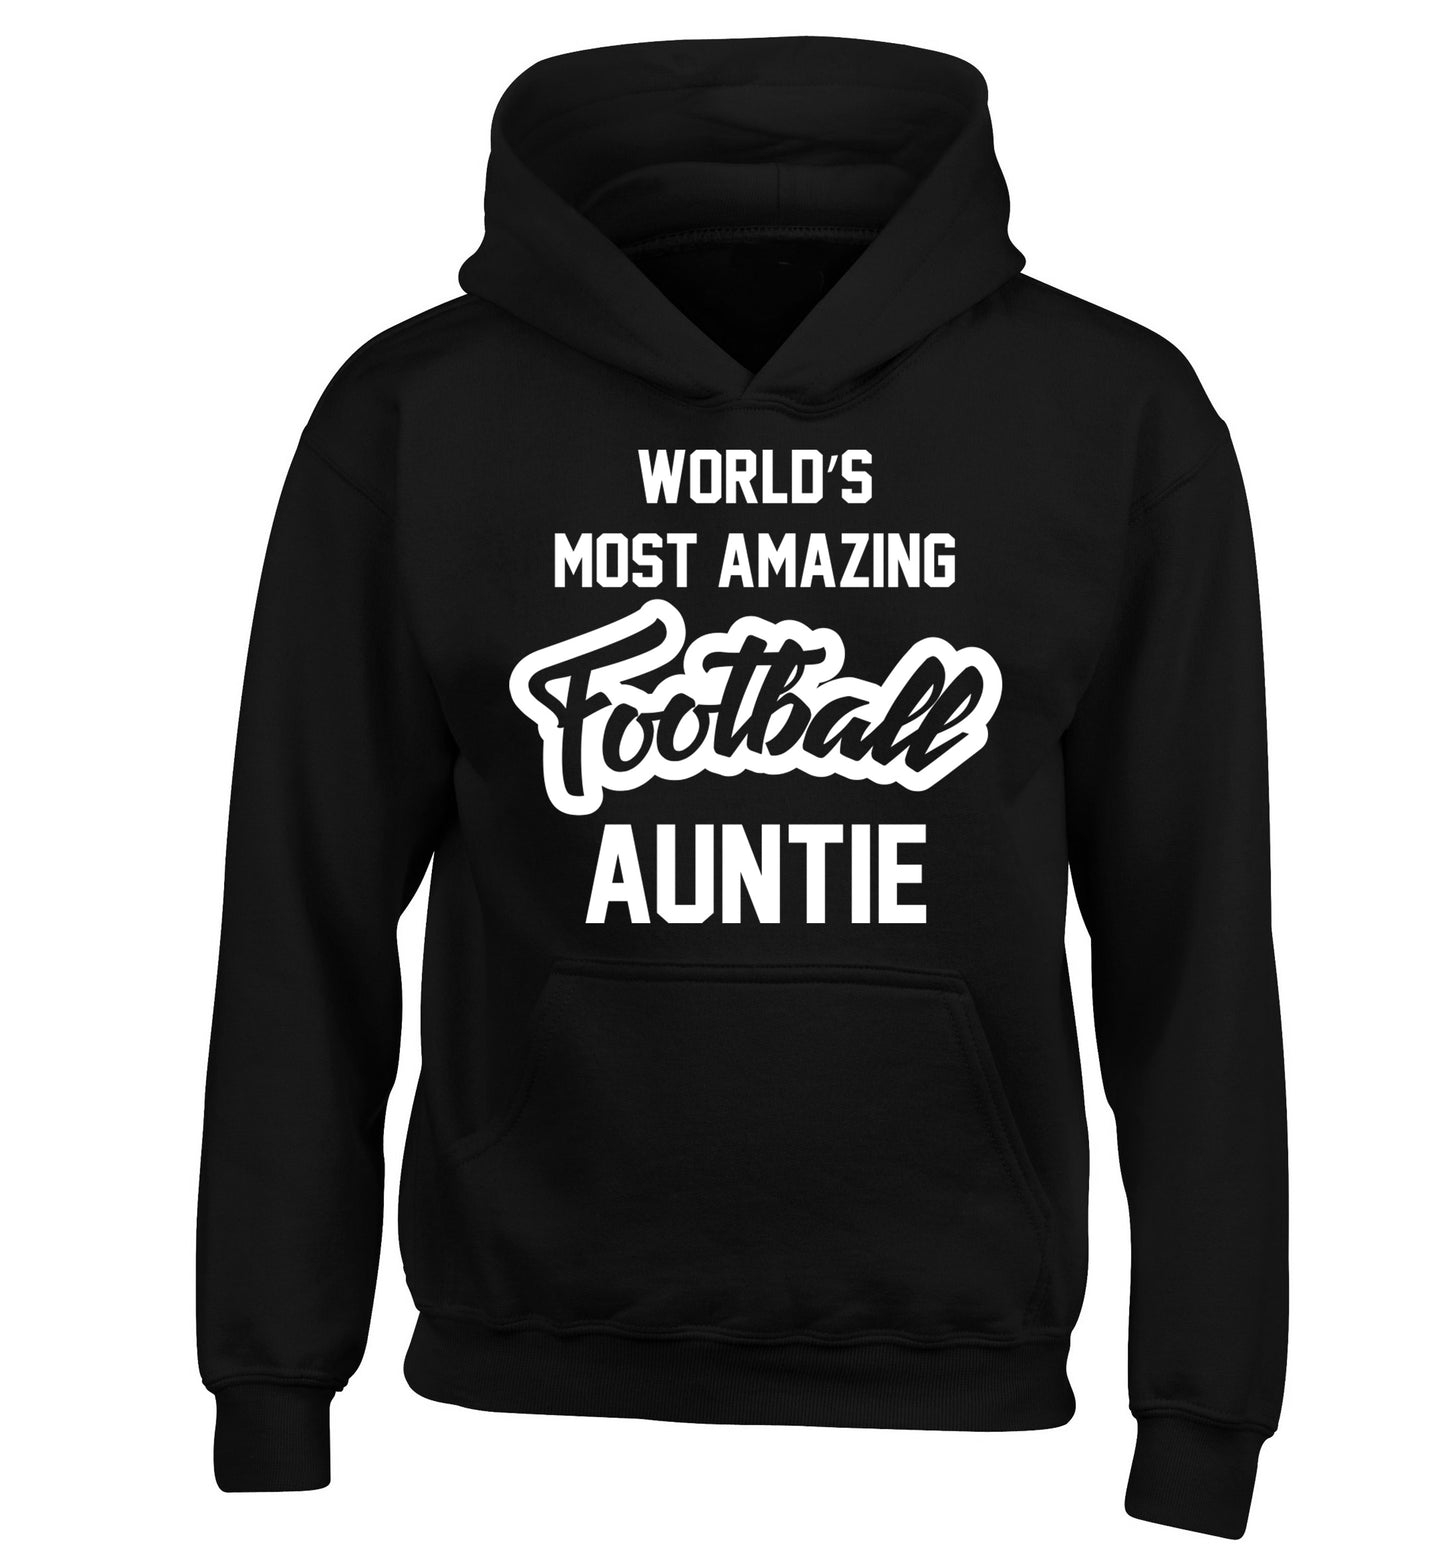 Worlds most amazing football auntie children's black hoodie 12-14 Years